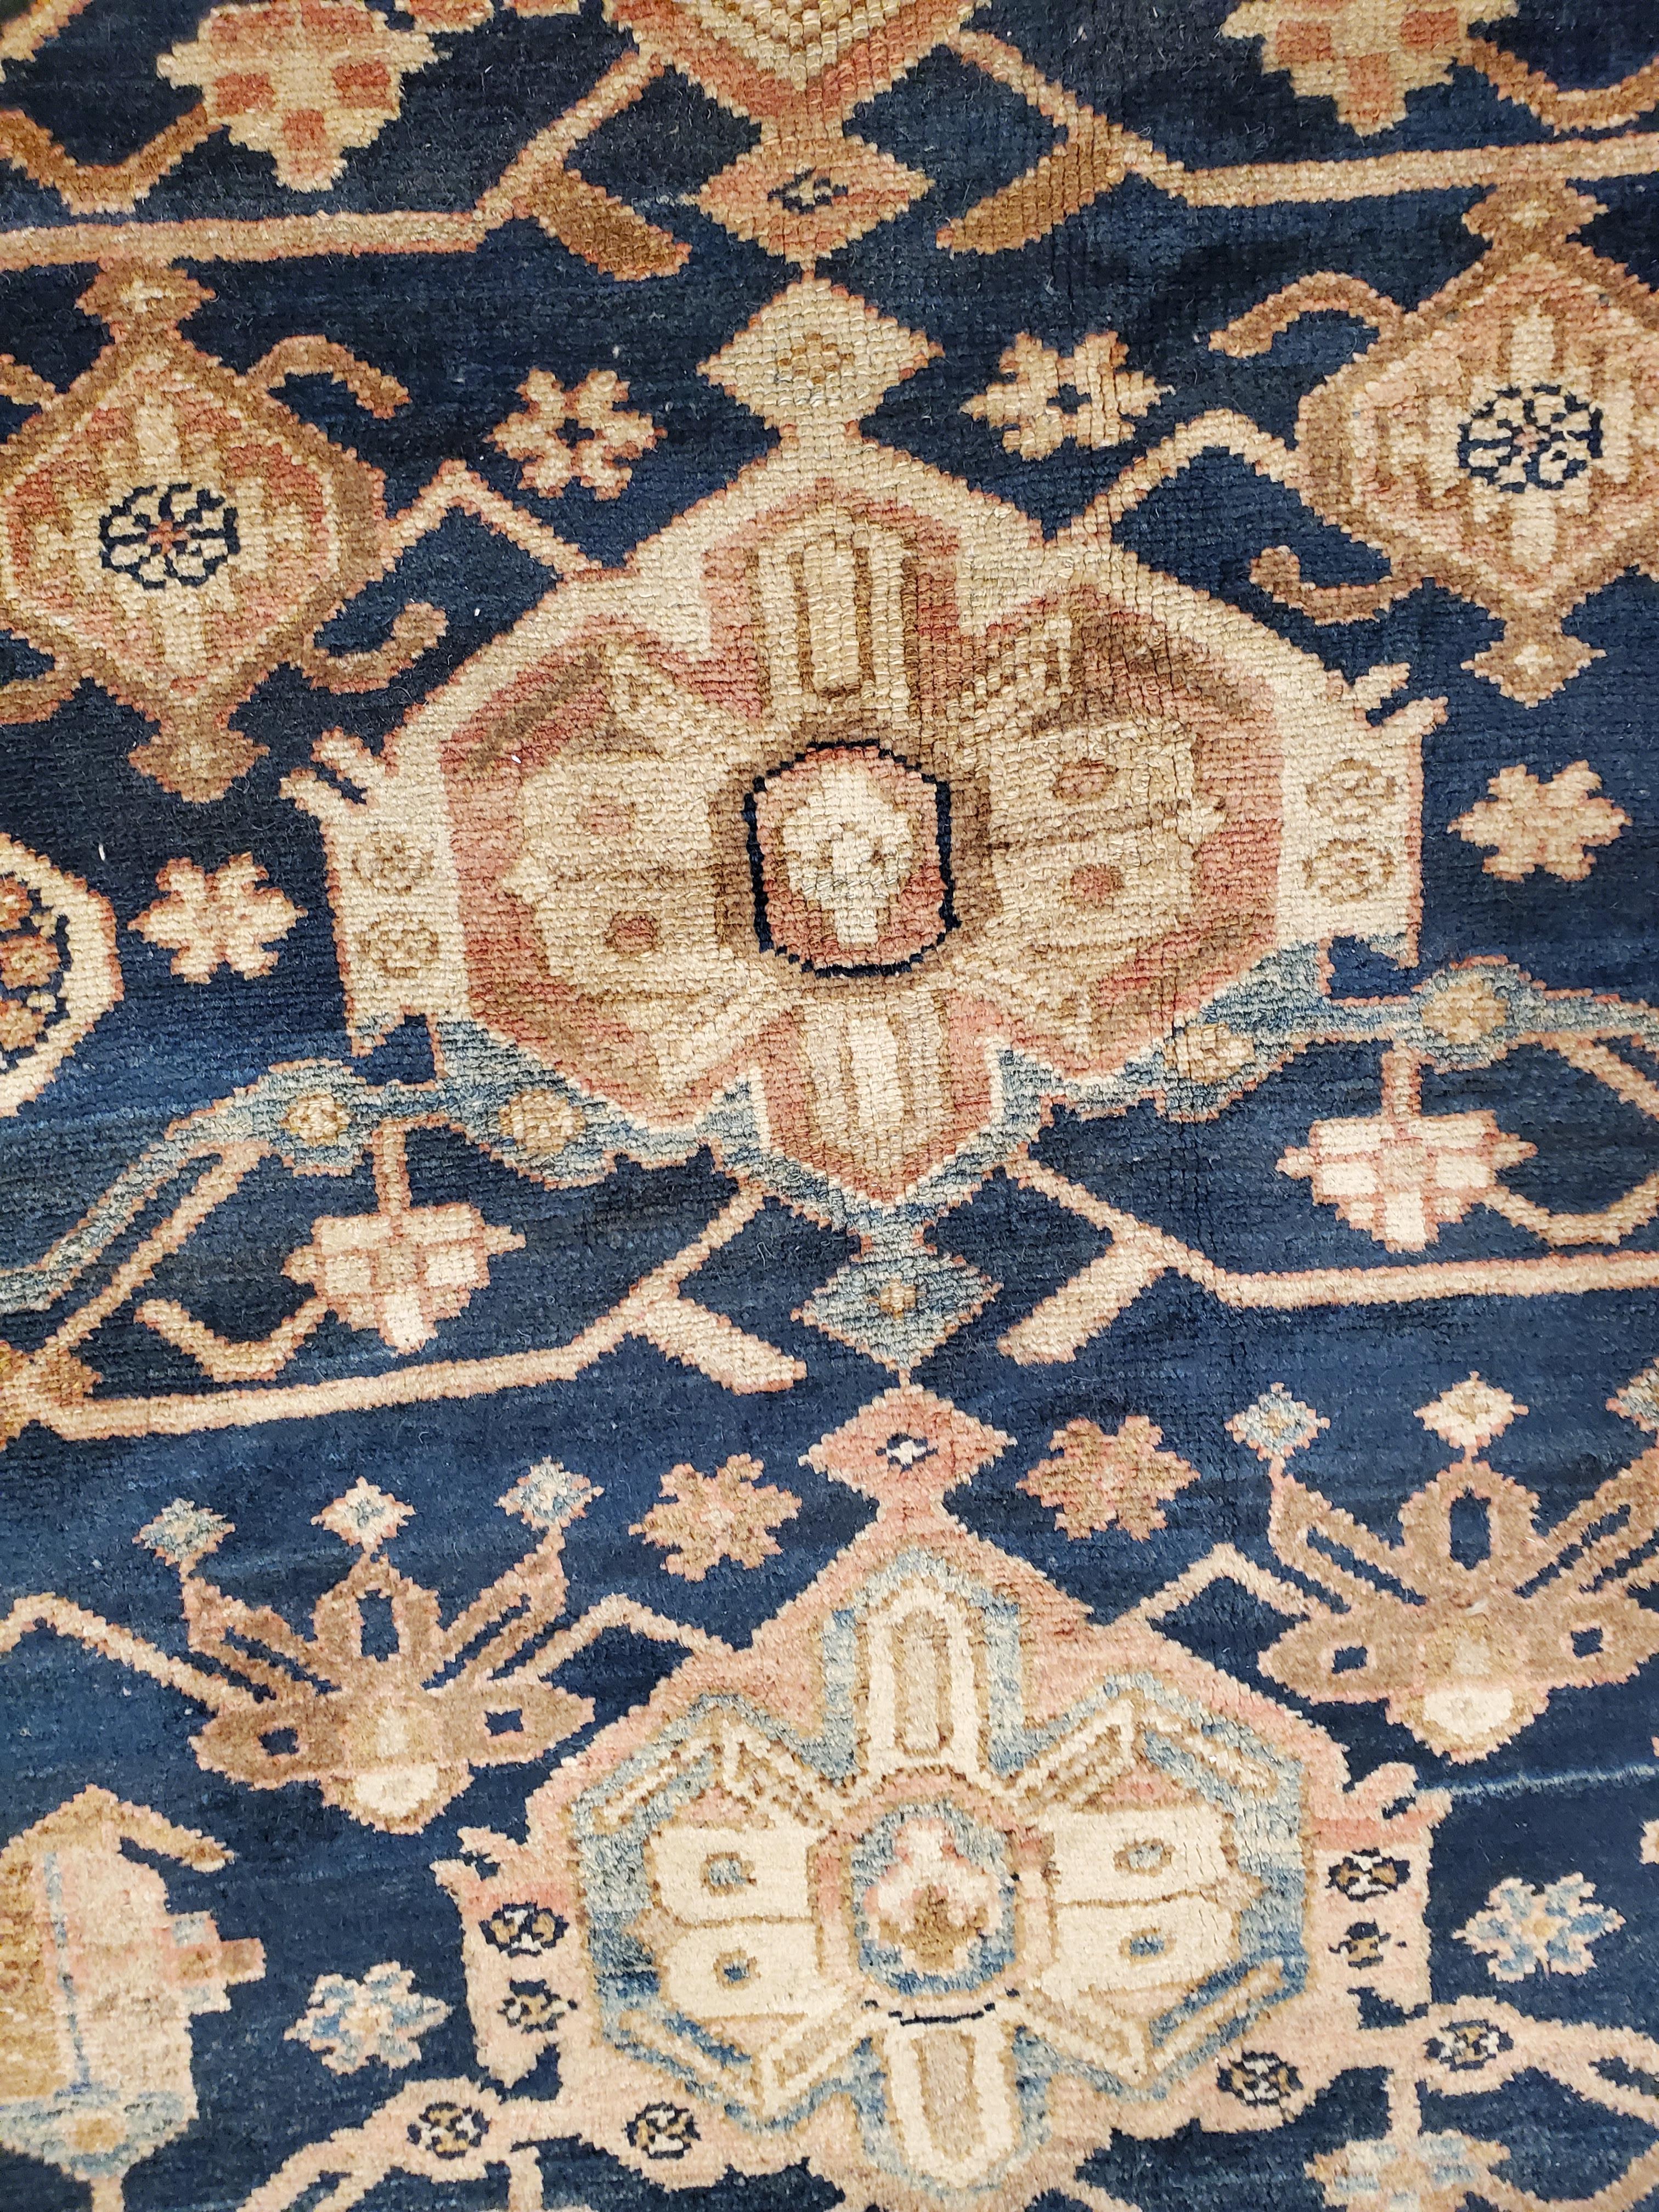 Wool Antique Persian Malayer Carpet, Handmade Oriental Rugs, Navy, Orange, Cream For Sale